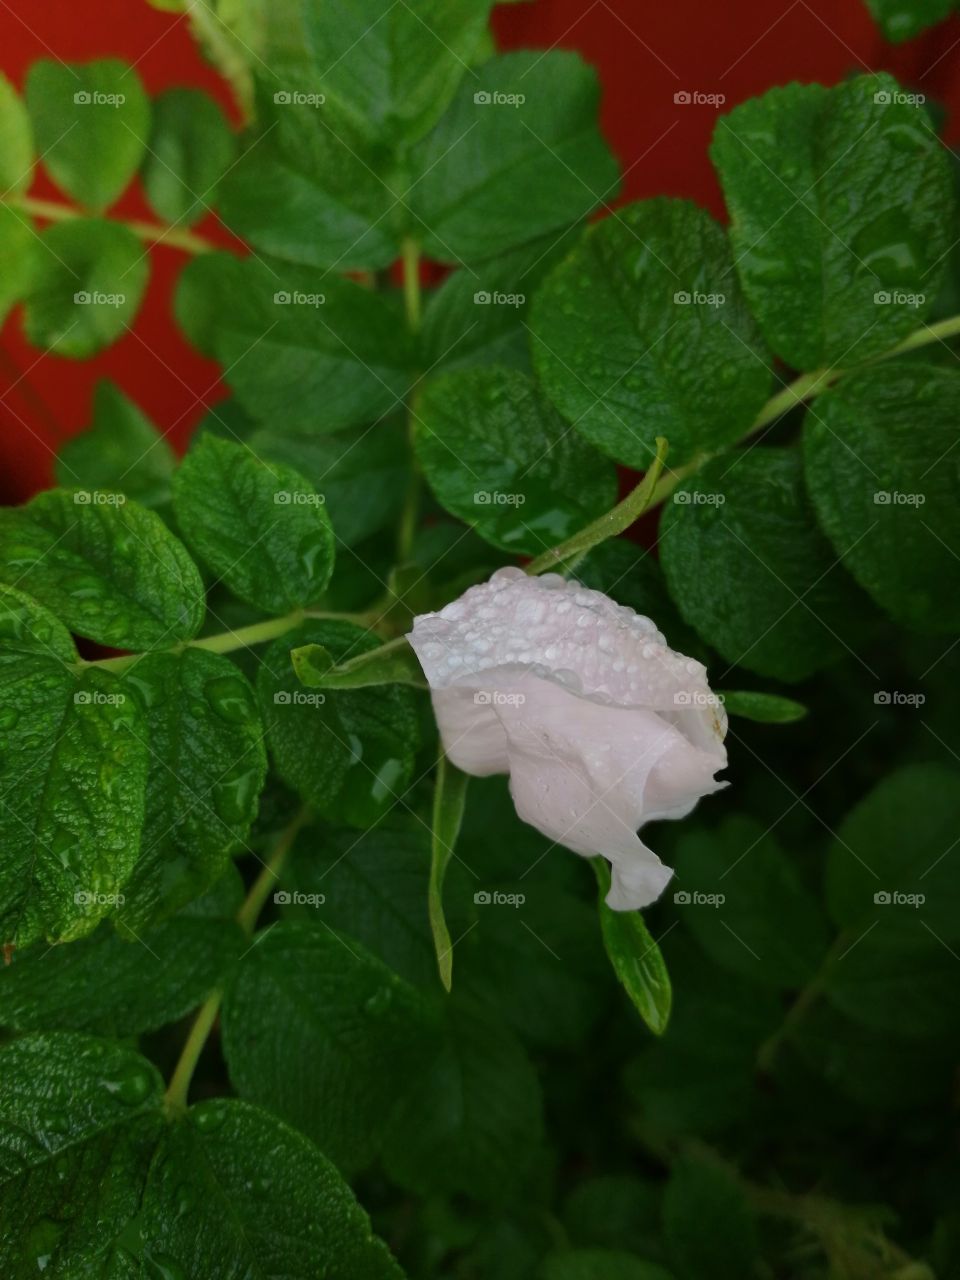 My first rose ❤️